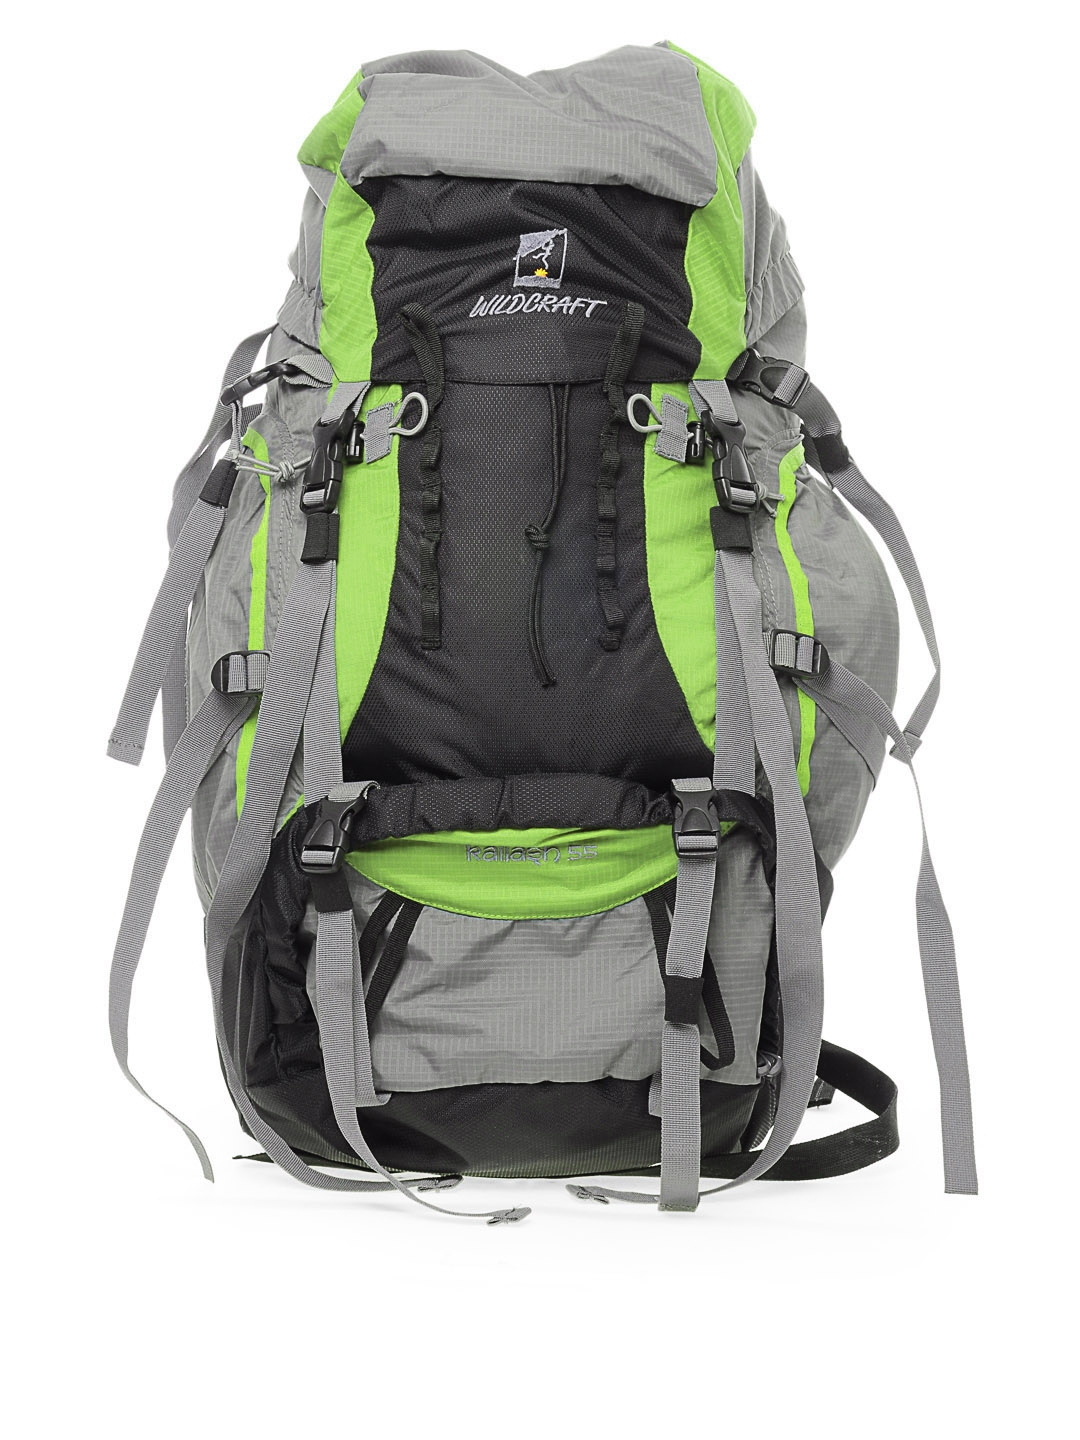 bluegreen Wildcraft Green Rucksack Trekking Bag Bag Capacity 55 L